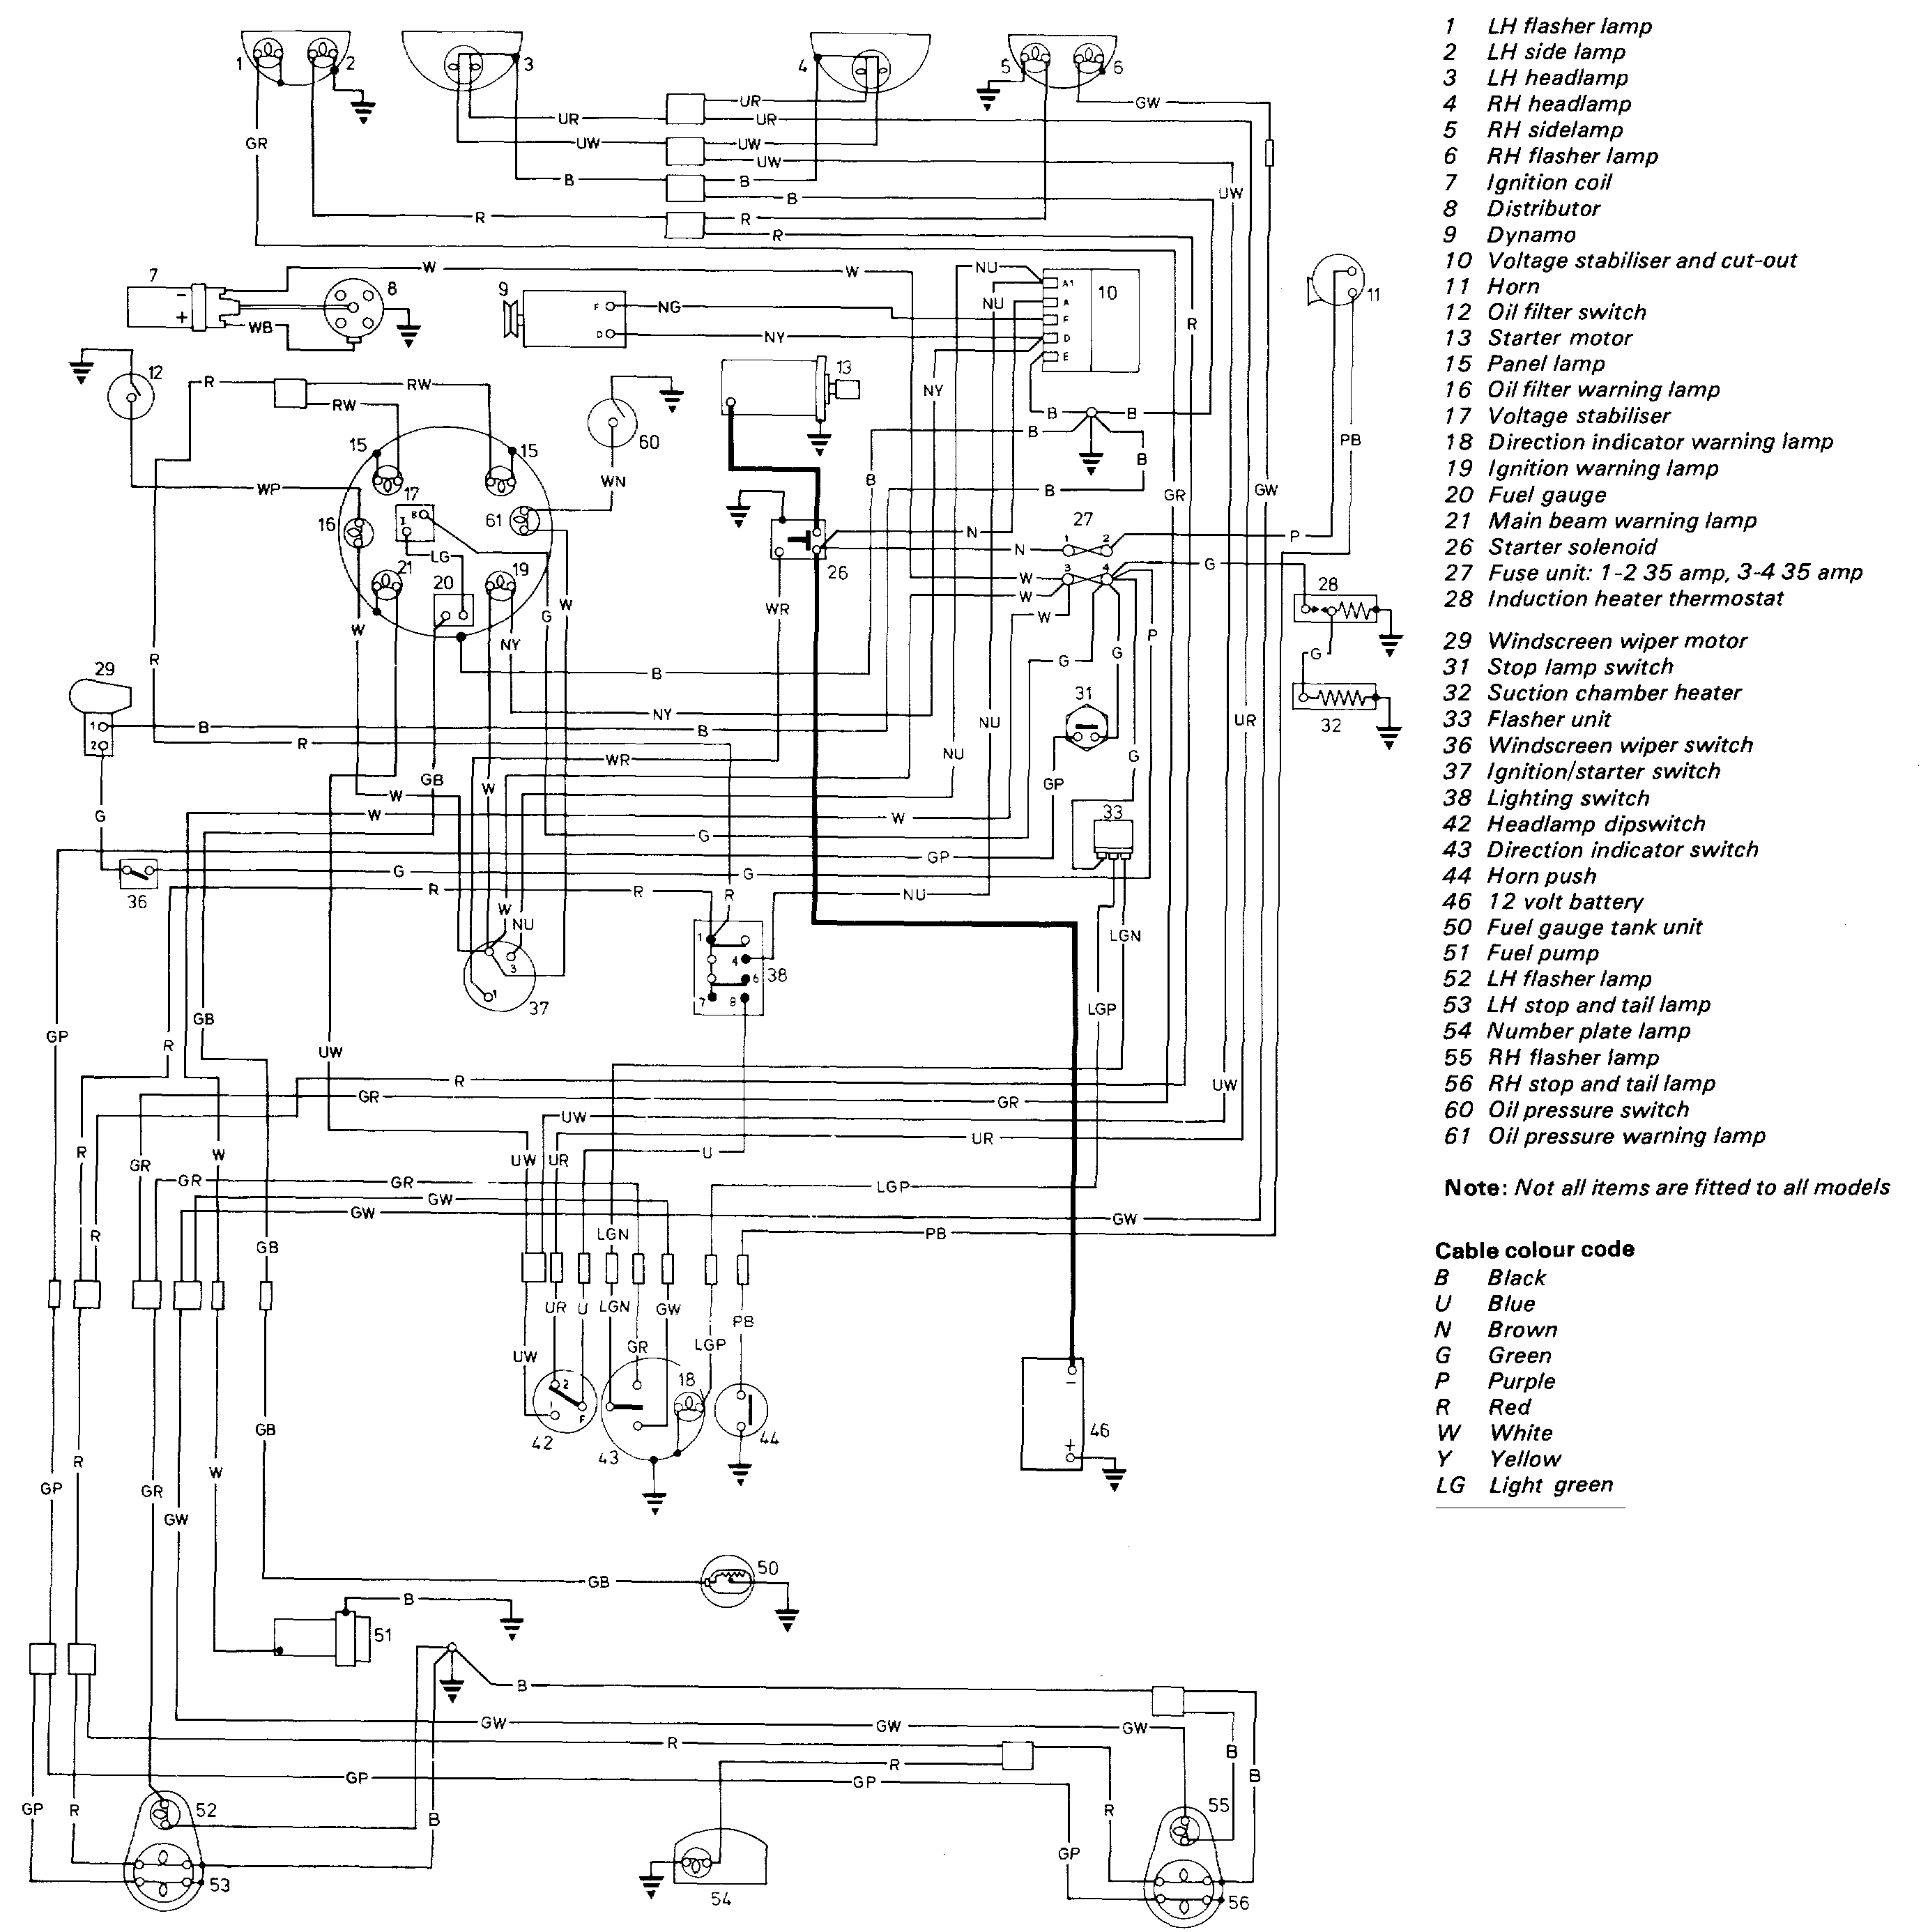 More wiring diagrams